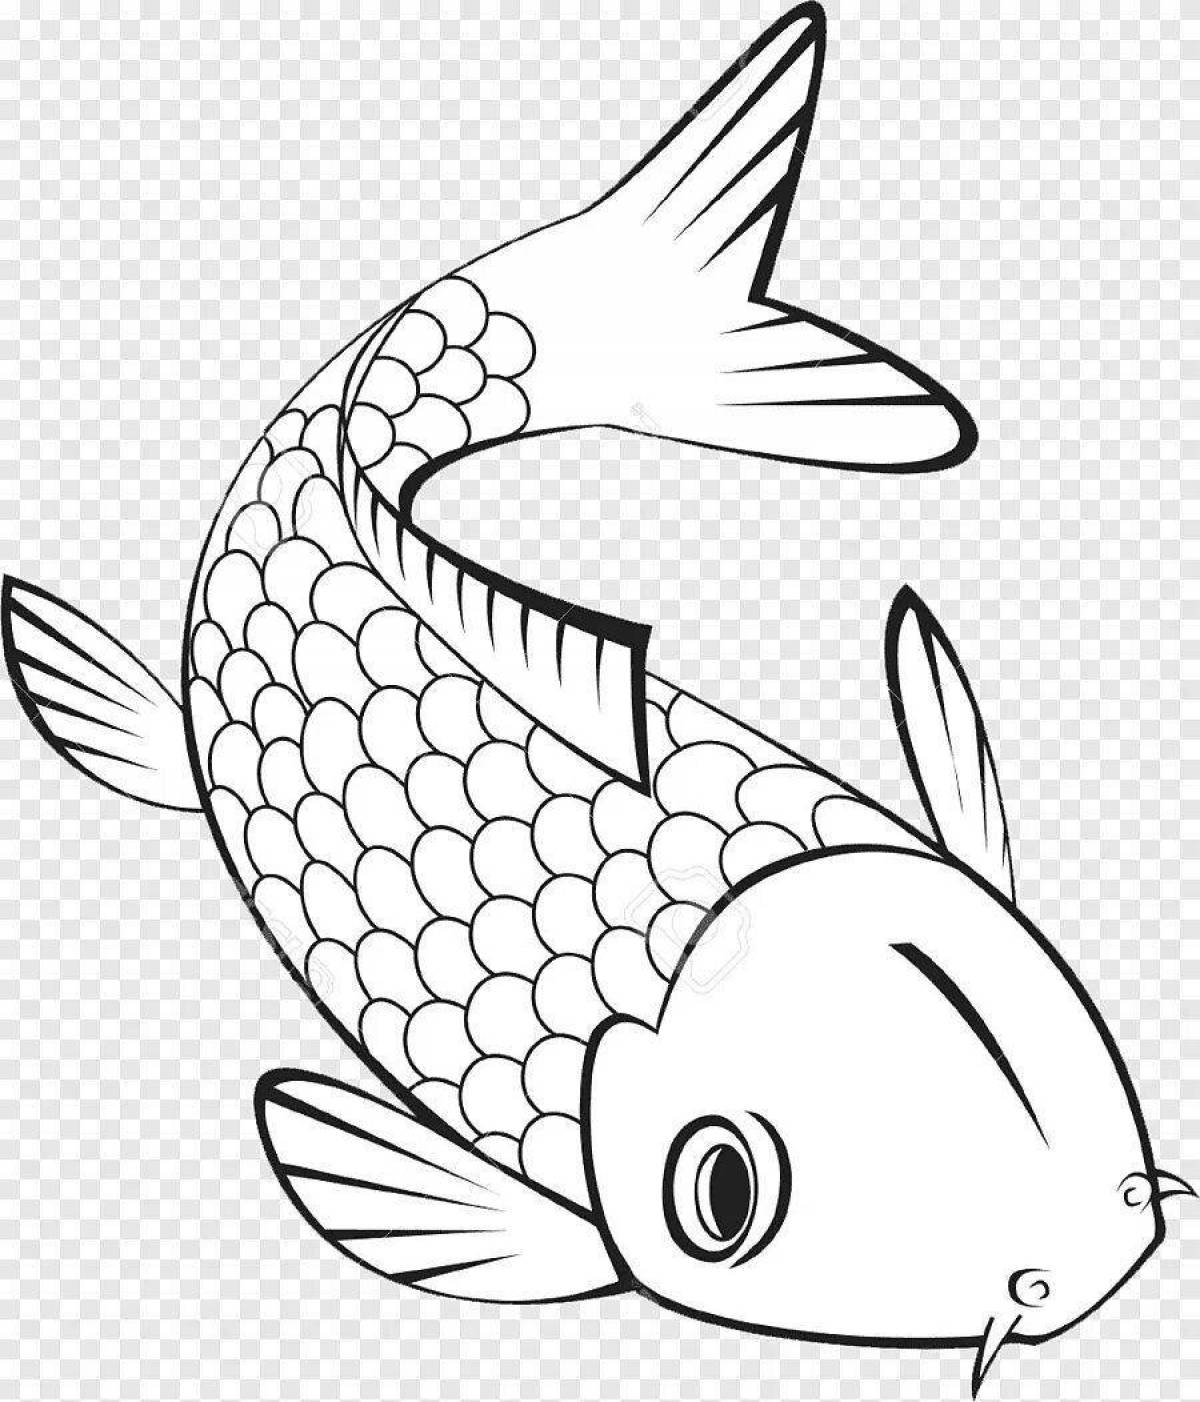 Fabulous big fish coloring page